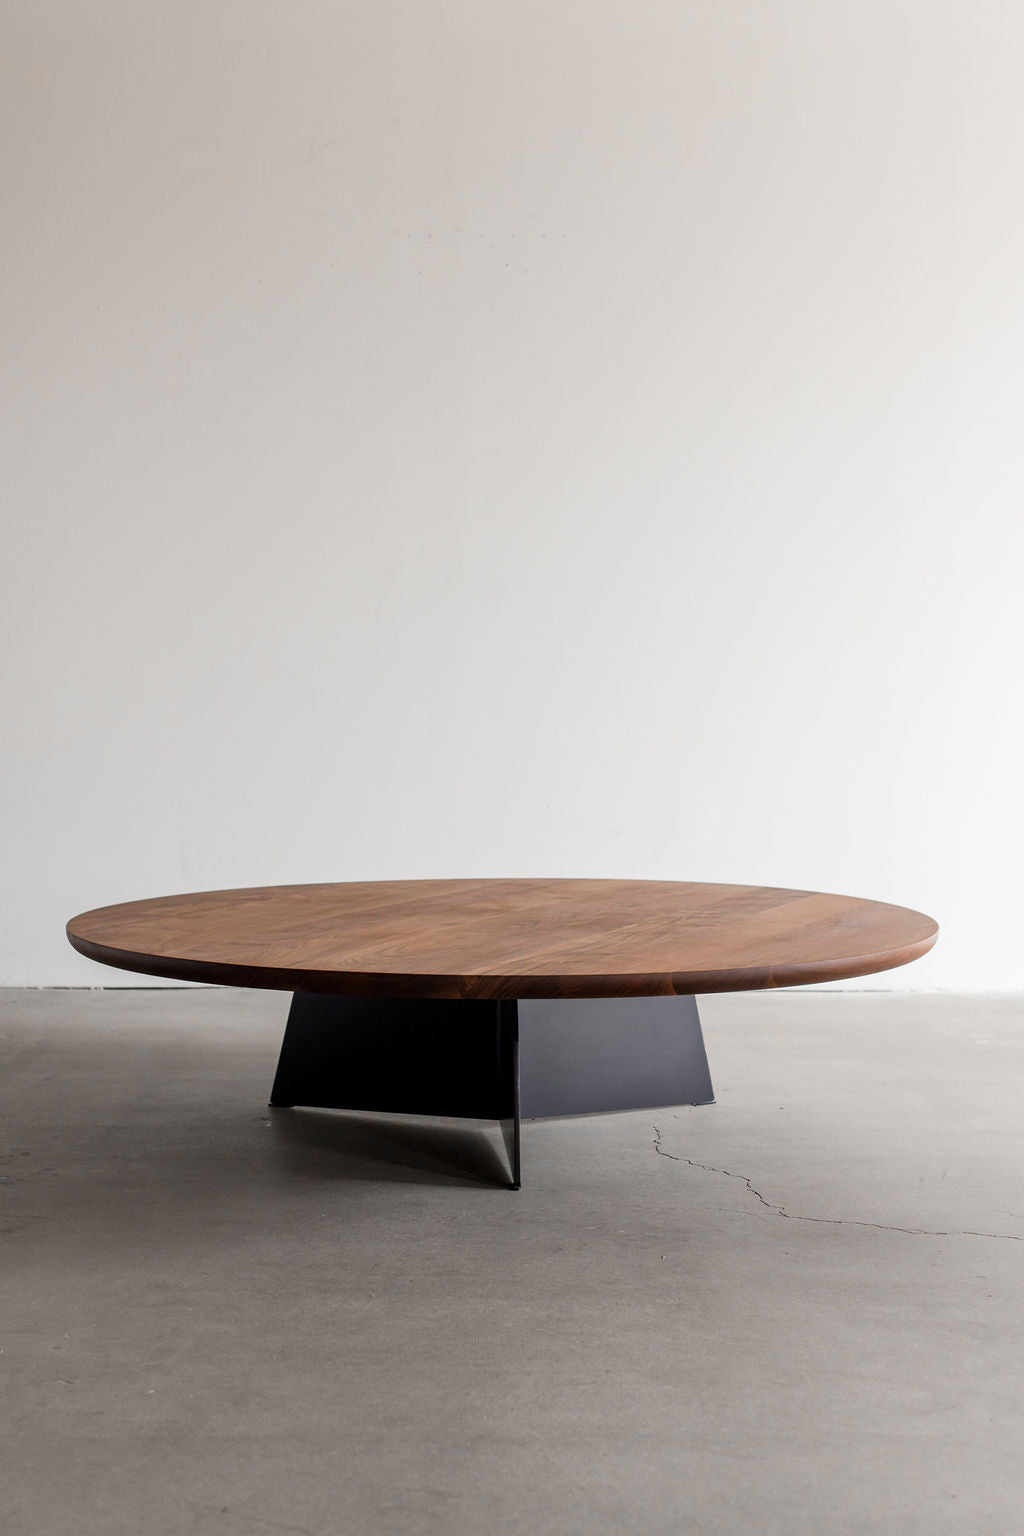 Tula Coffee table- steel legs with walnut wood top